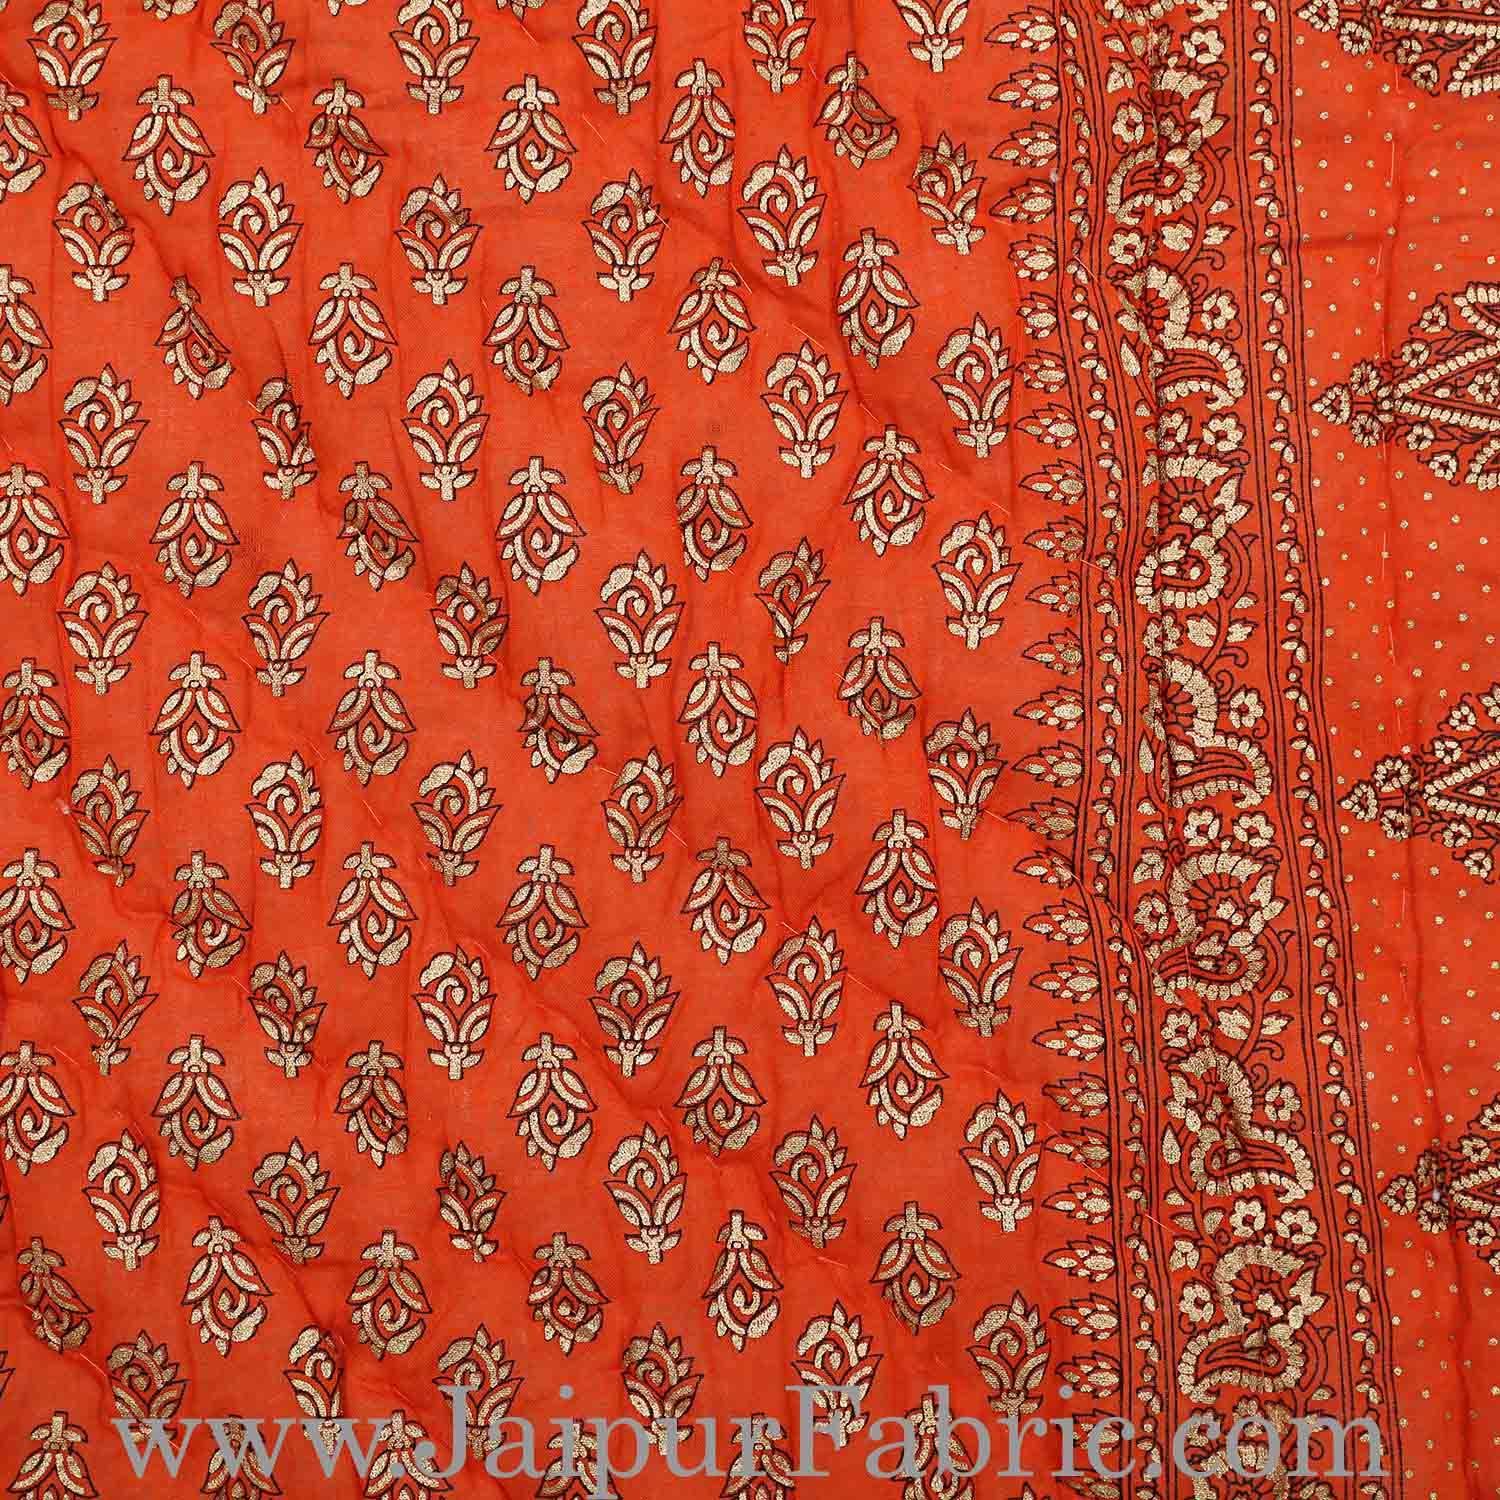 Jaipuri Single Razai Orange Color With Orange Base Small Booti Print